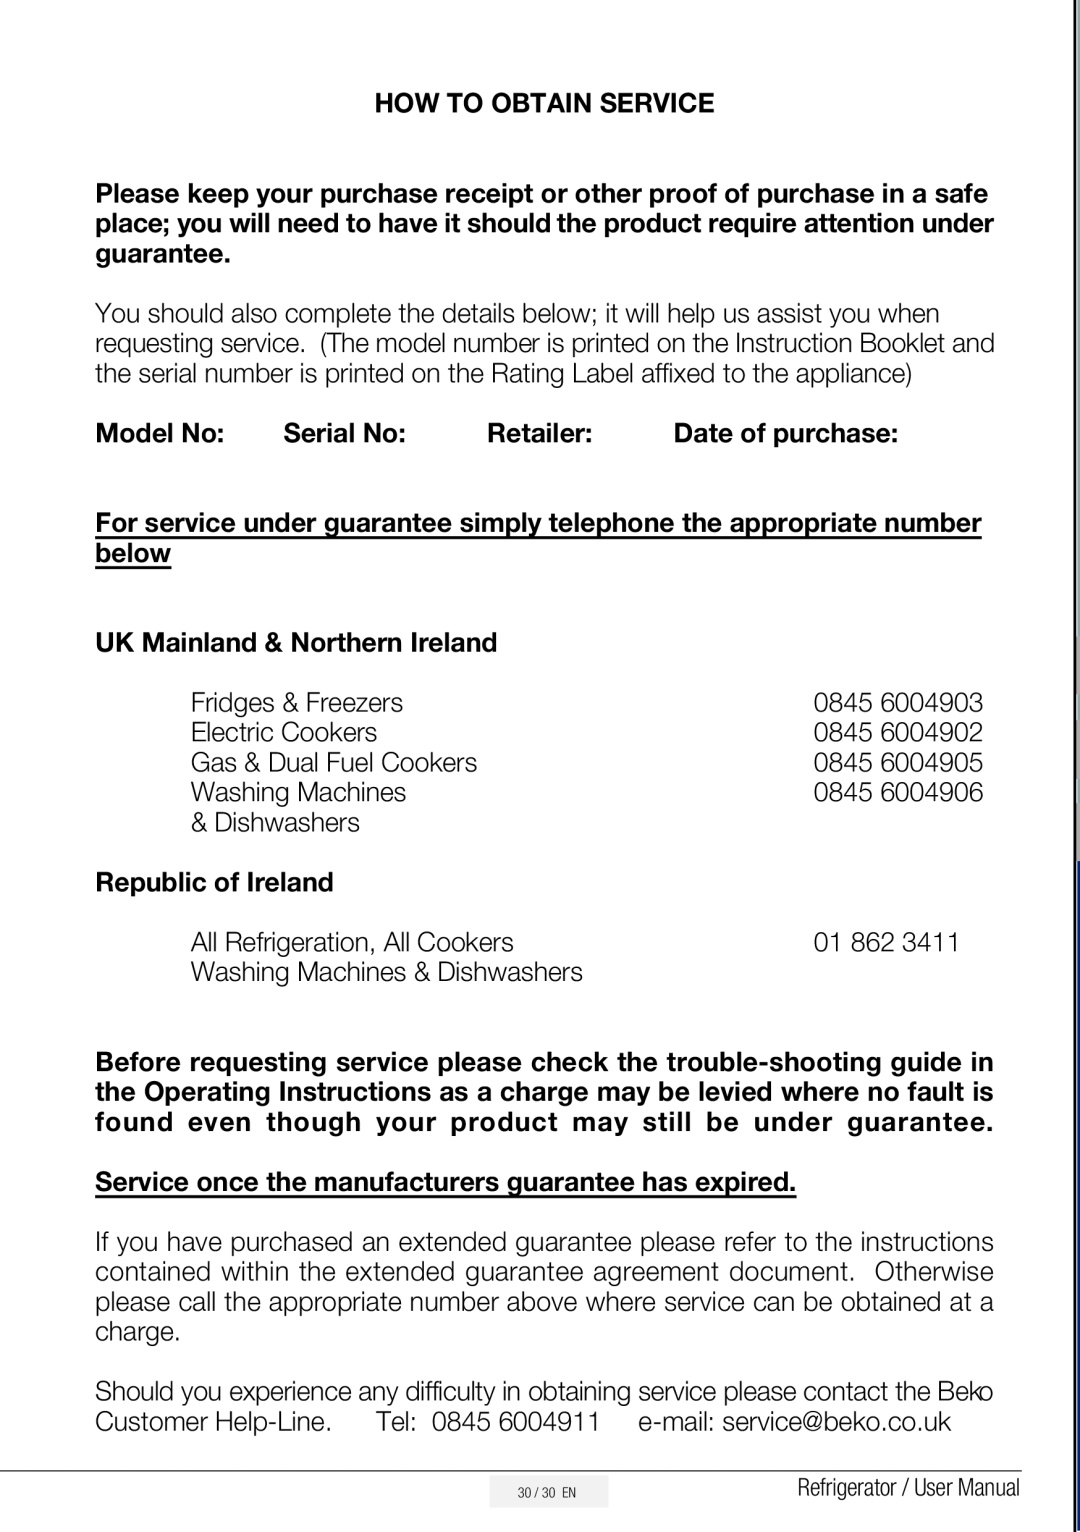 Beko ASN541B How To Obtain Service, Model No Serial No Retailer Date of purchase, below, UK Mainland & Northern Ireland 